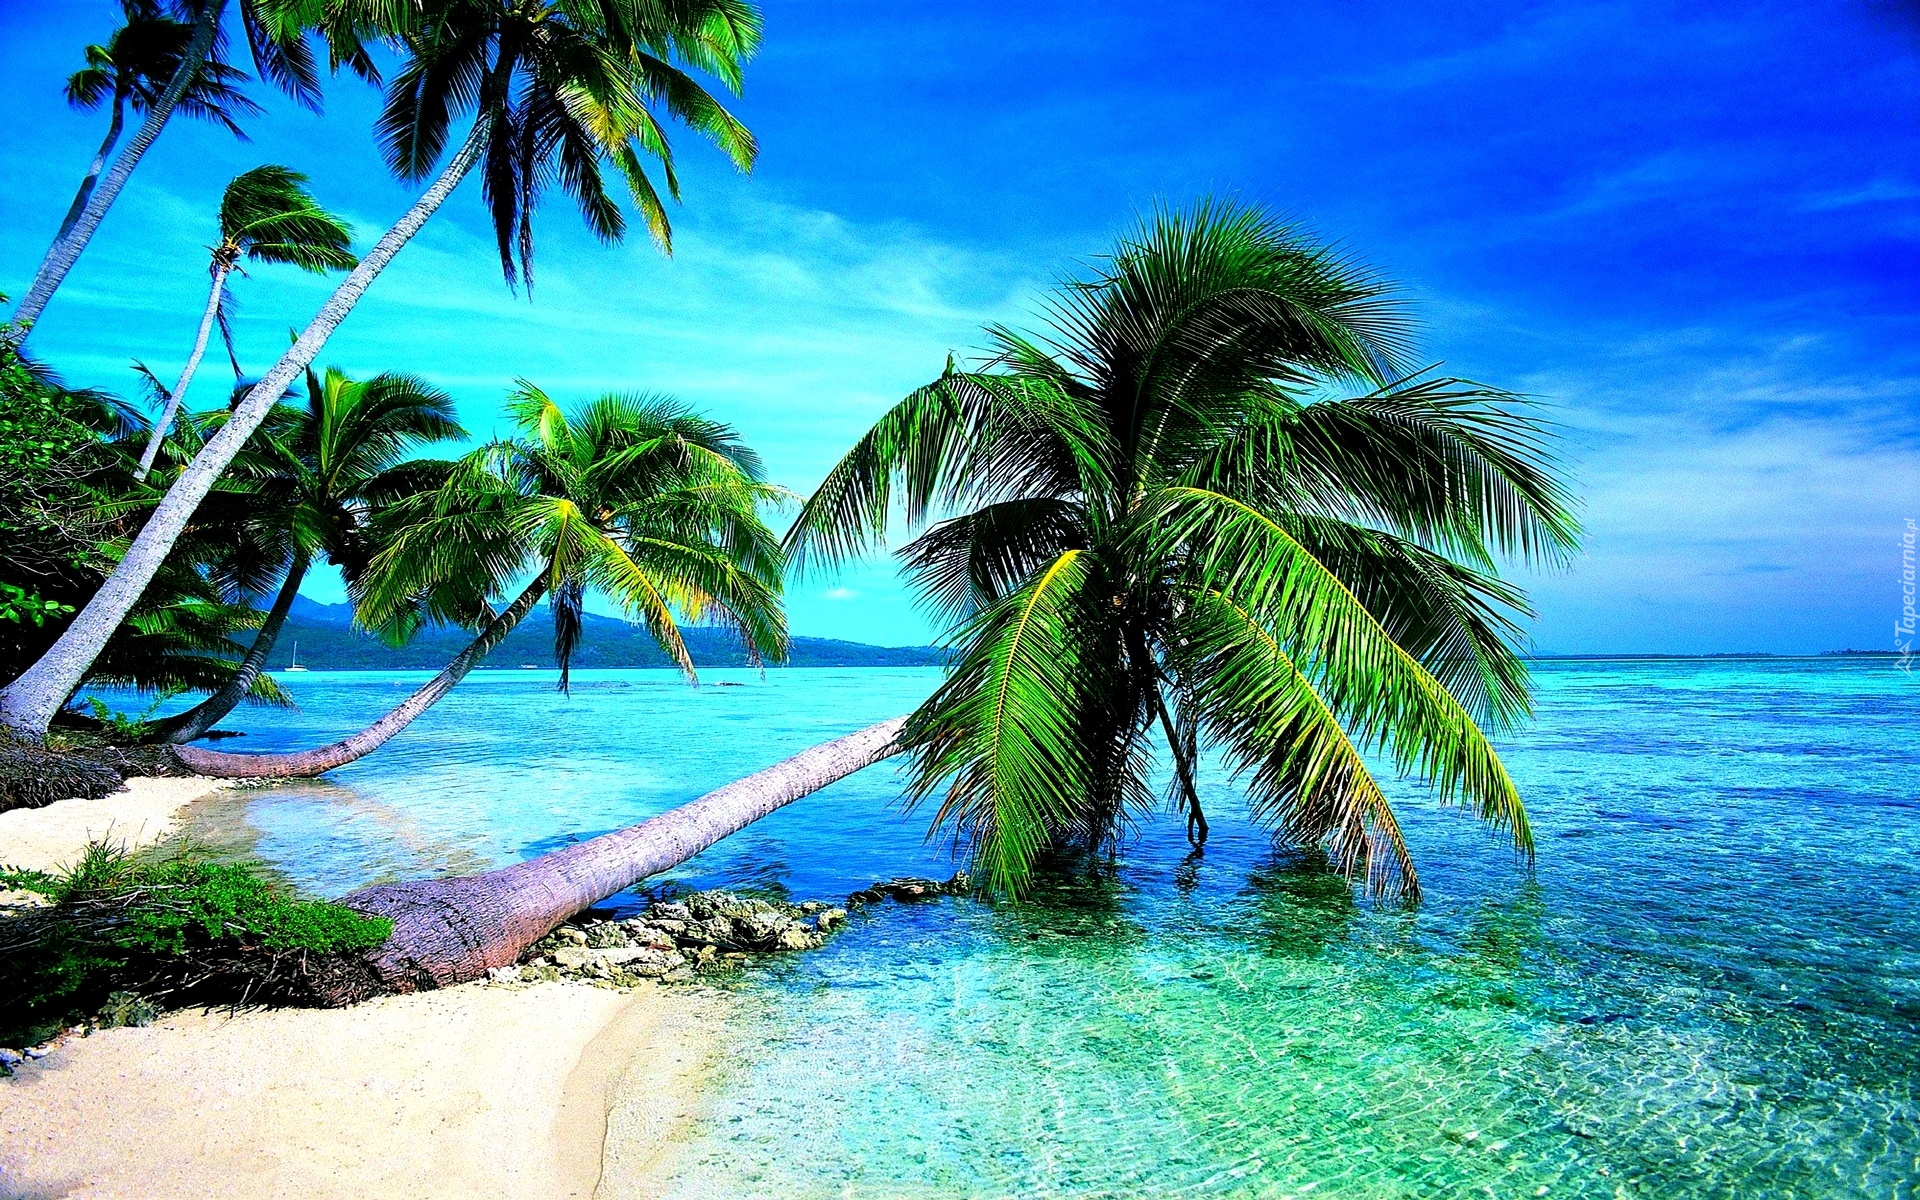 Tropiki, Morze, Plaża, Palmy